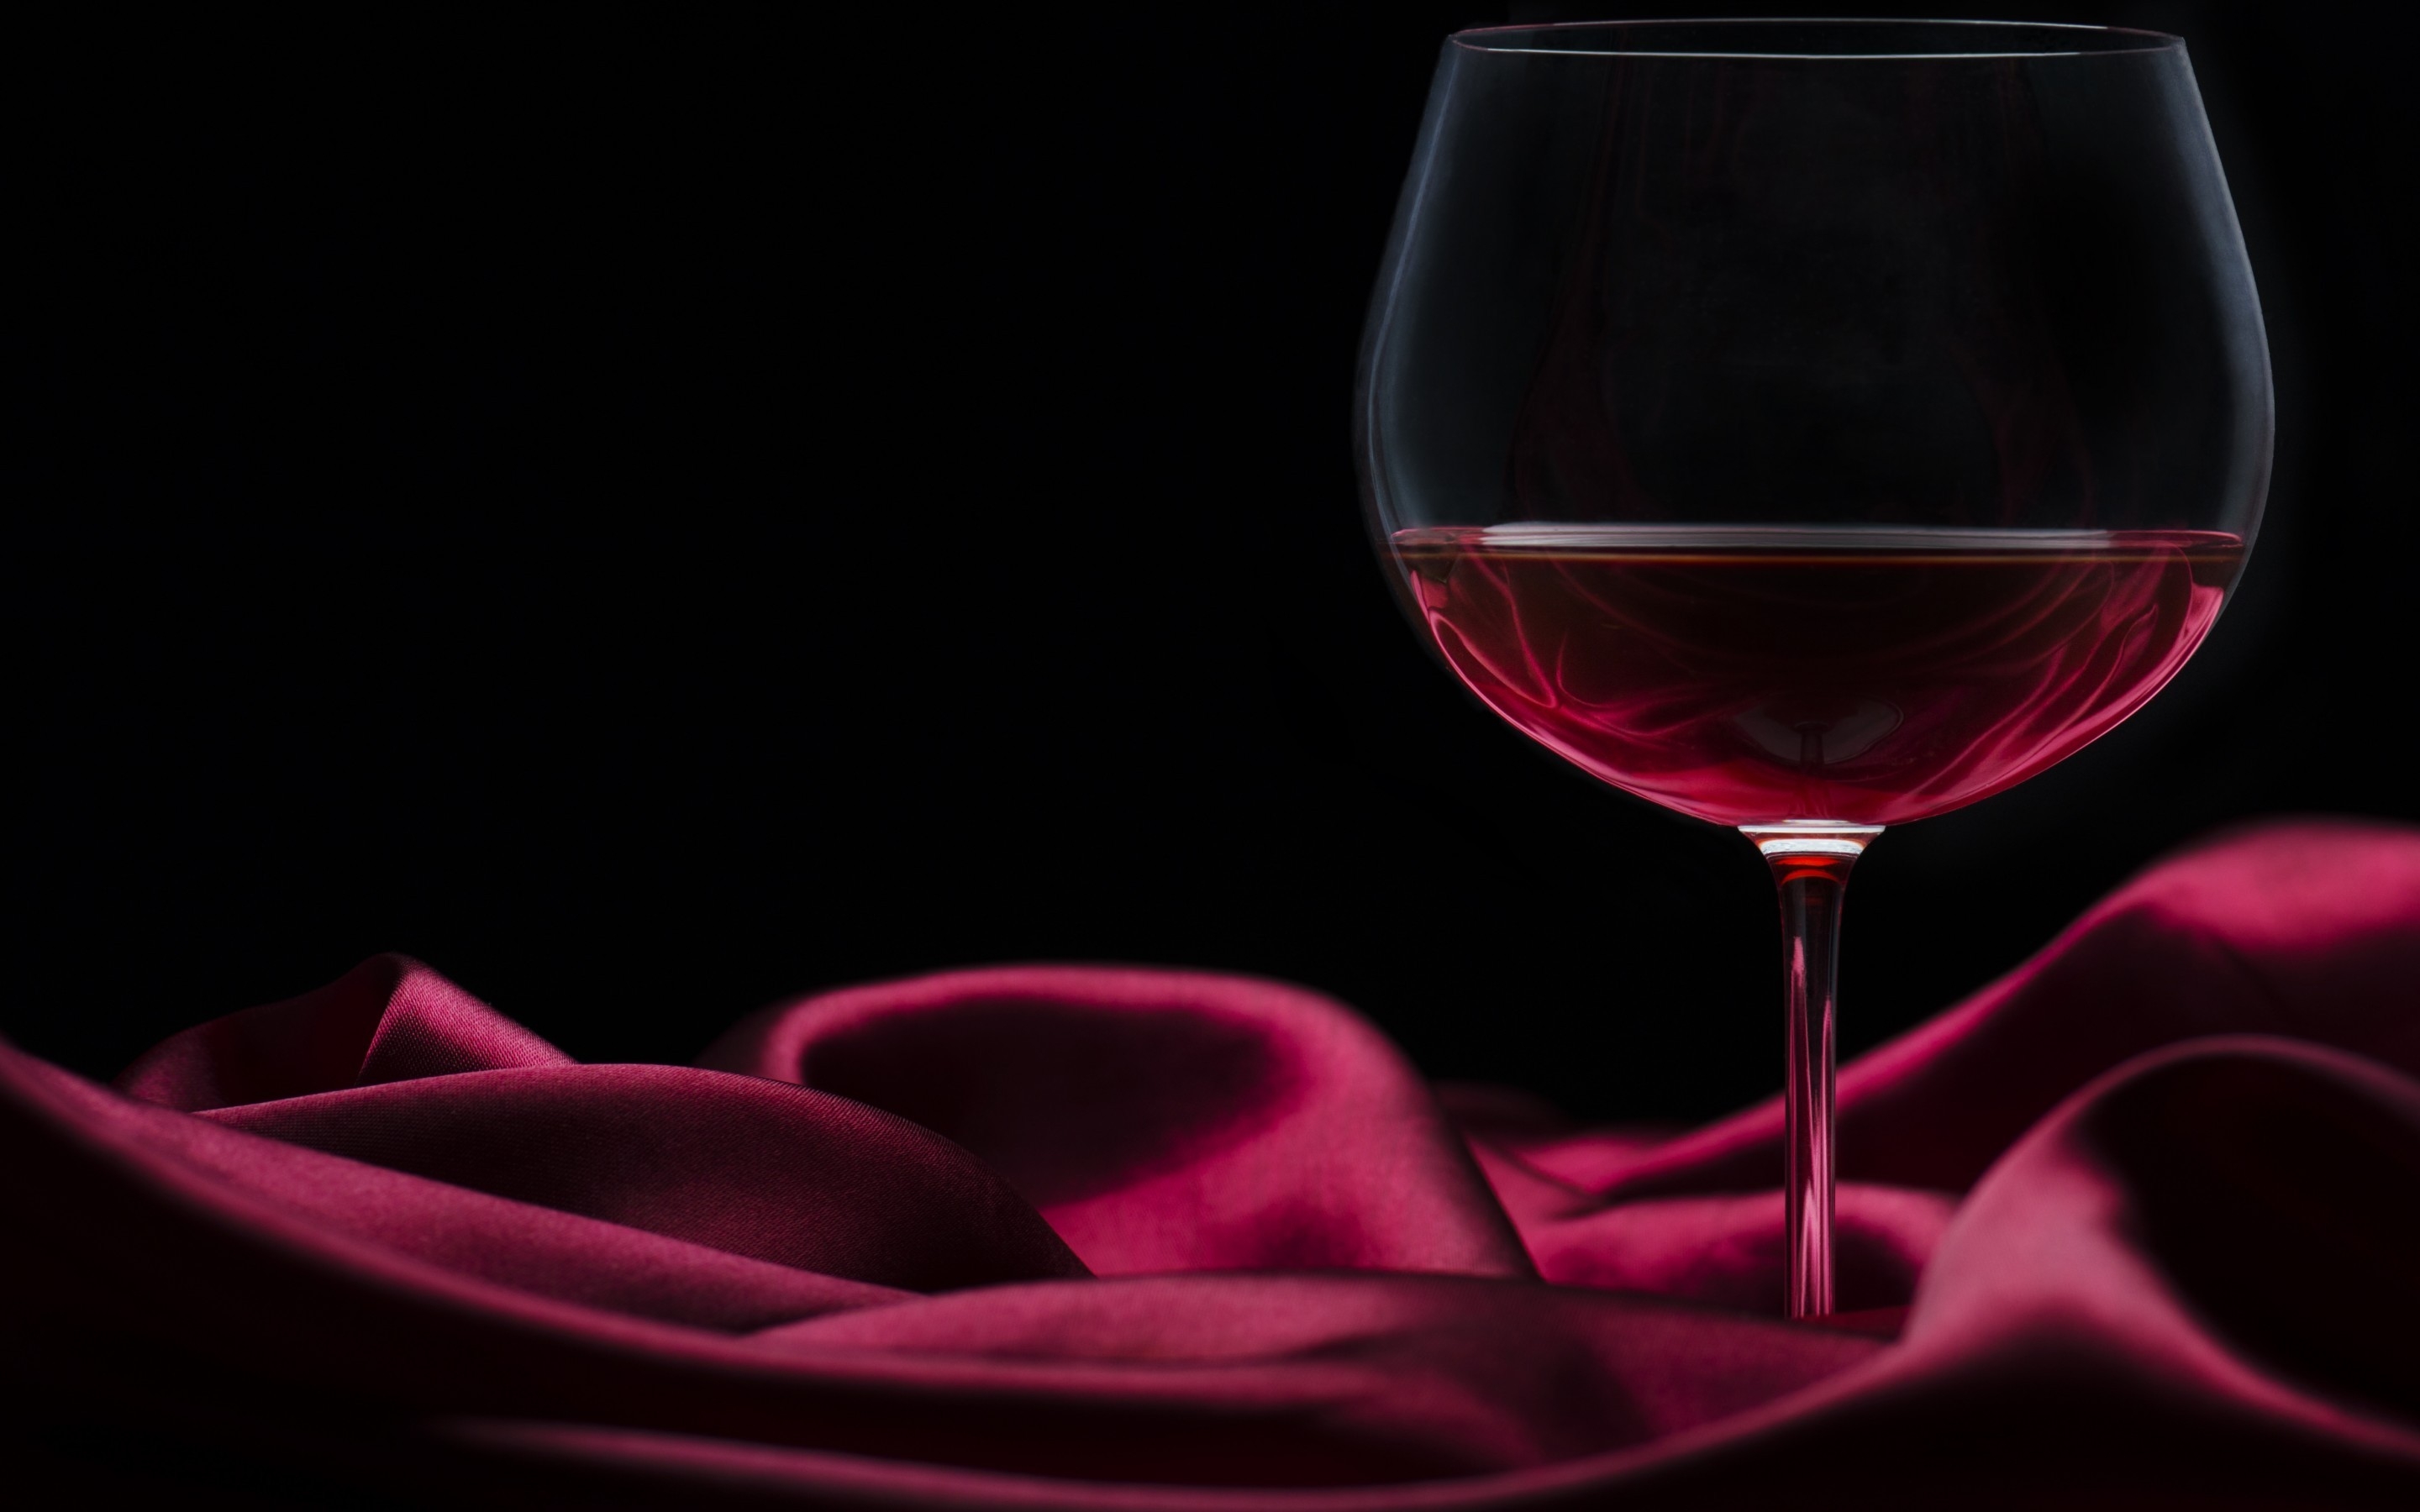 Red Wine for 2880 x 1800 Retina Display resolution